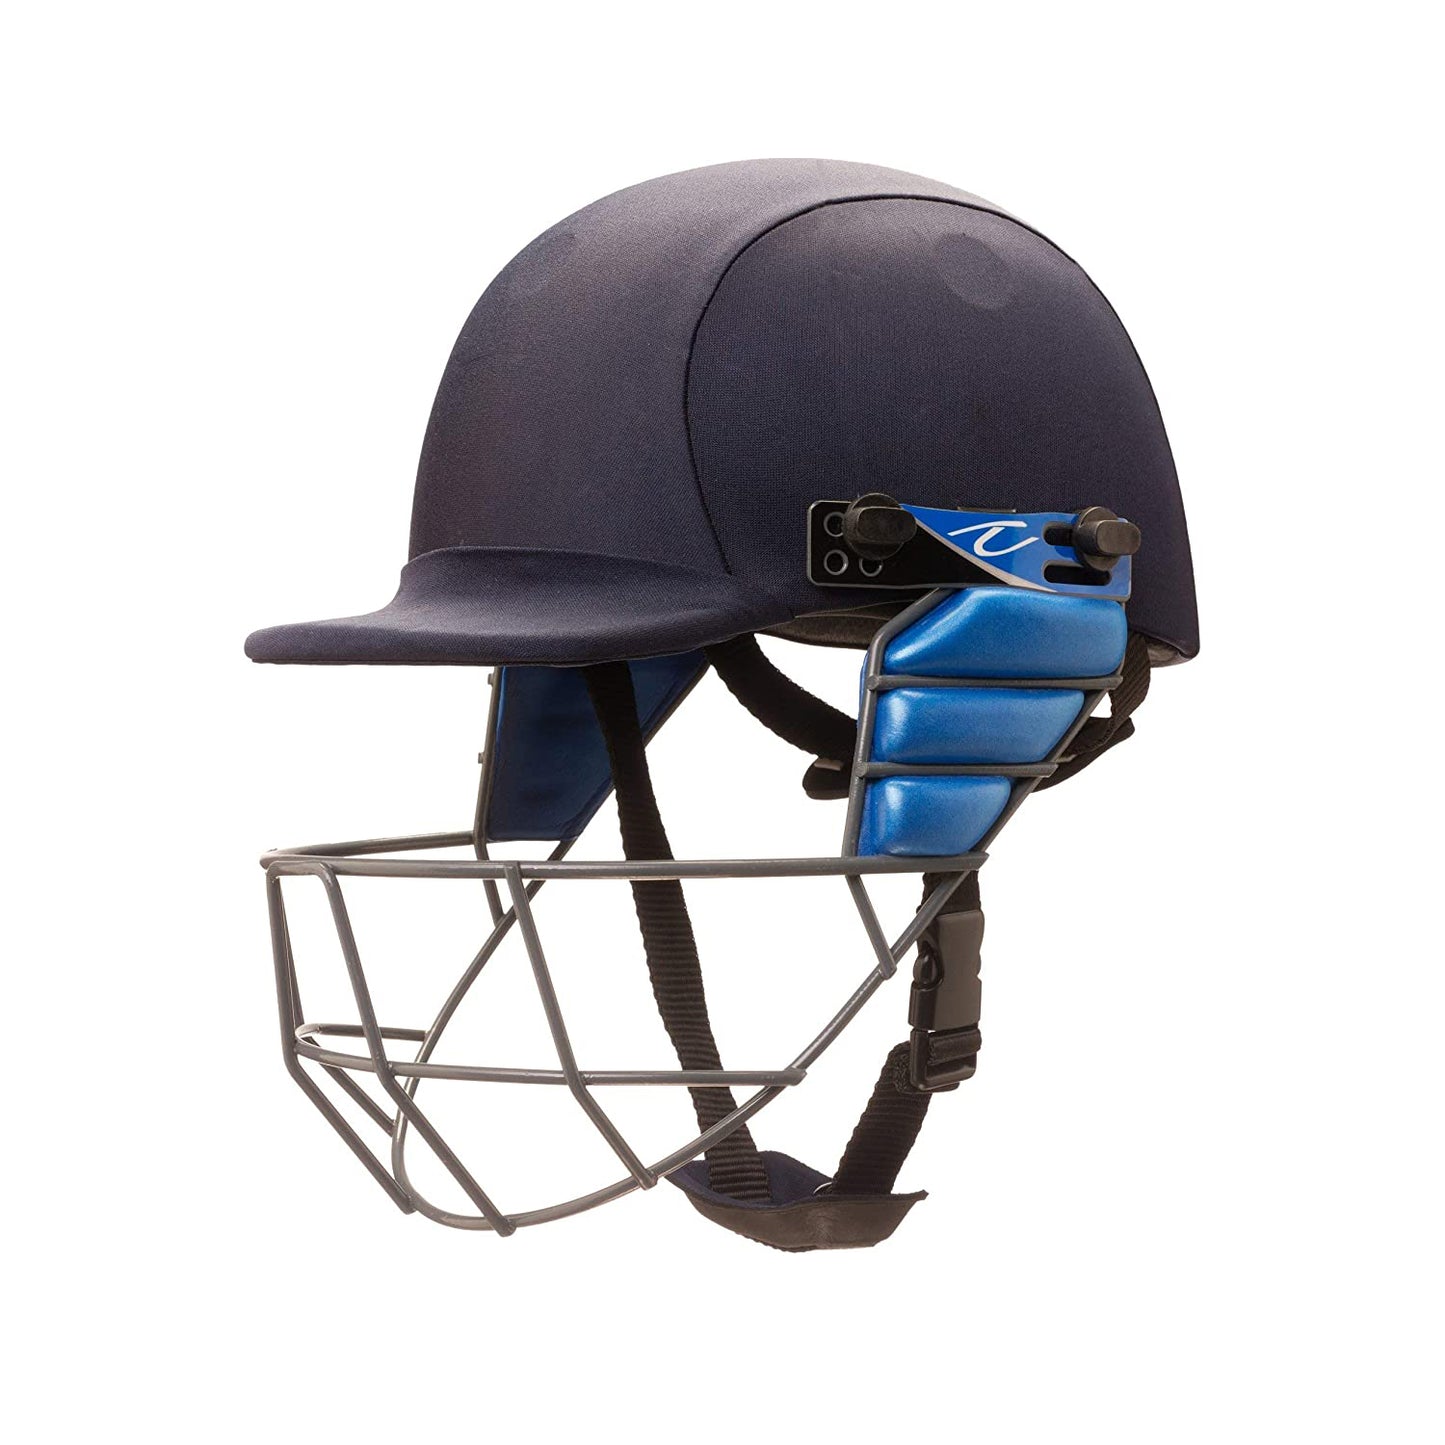 Forma Players TNM Titanium Cricket Helmet - Best Price online Prokicksports.com